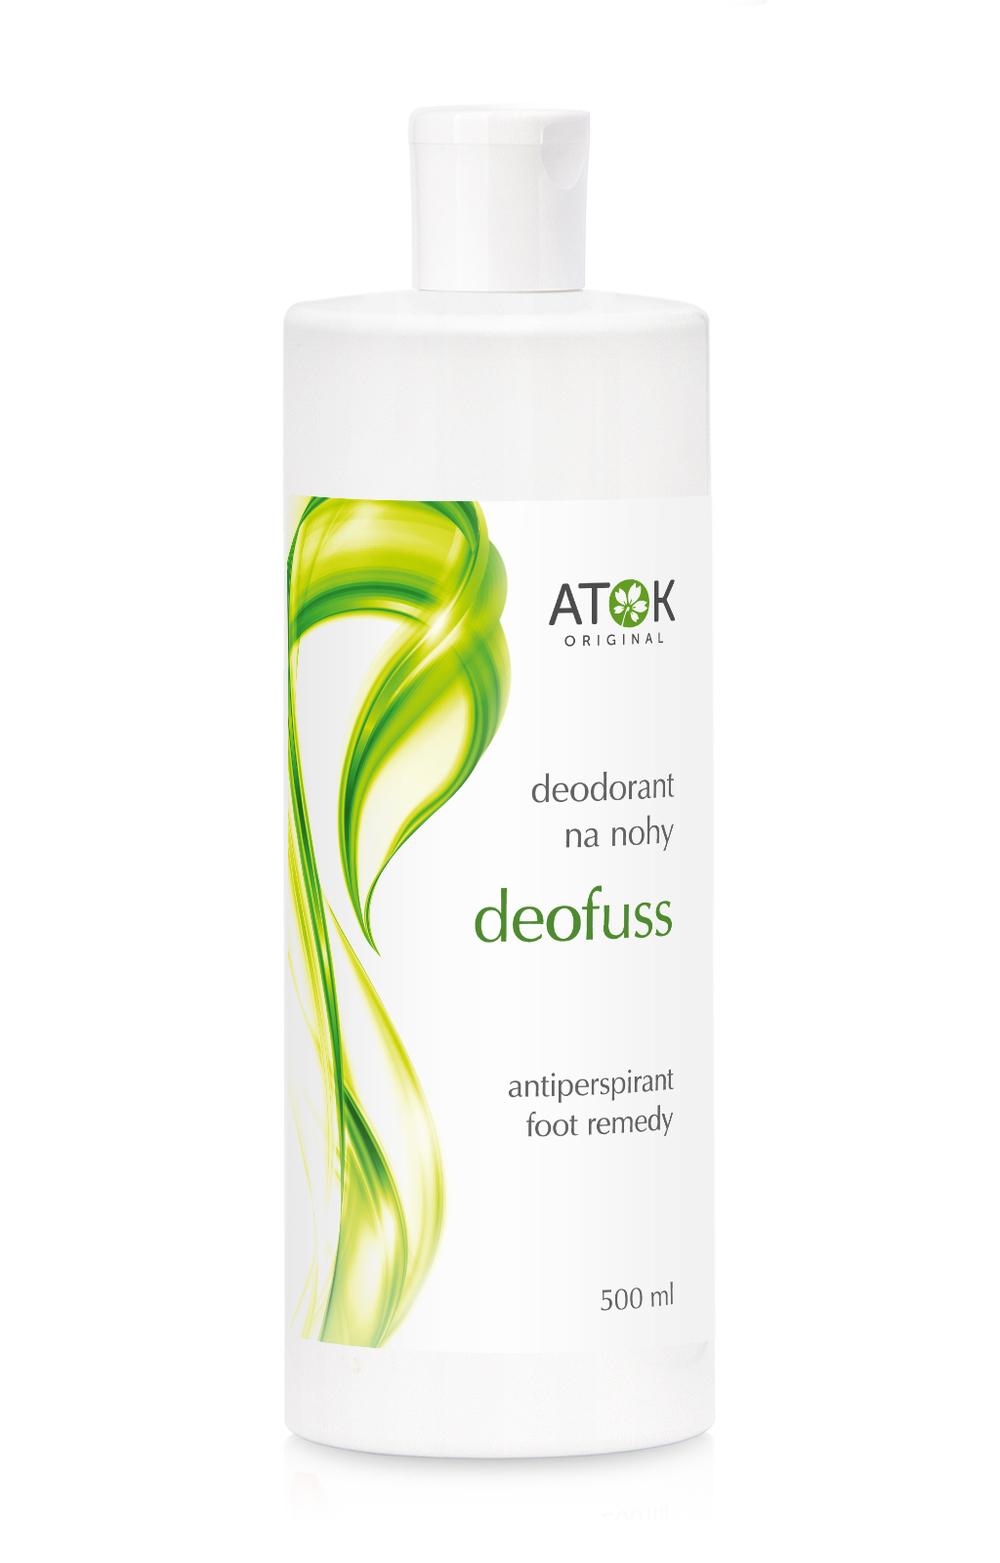 Deodorant na nohy Deofuss - Original ATOK Obsah: 500 ml